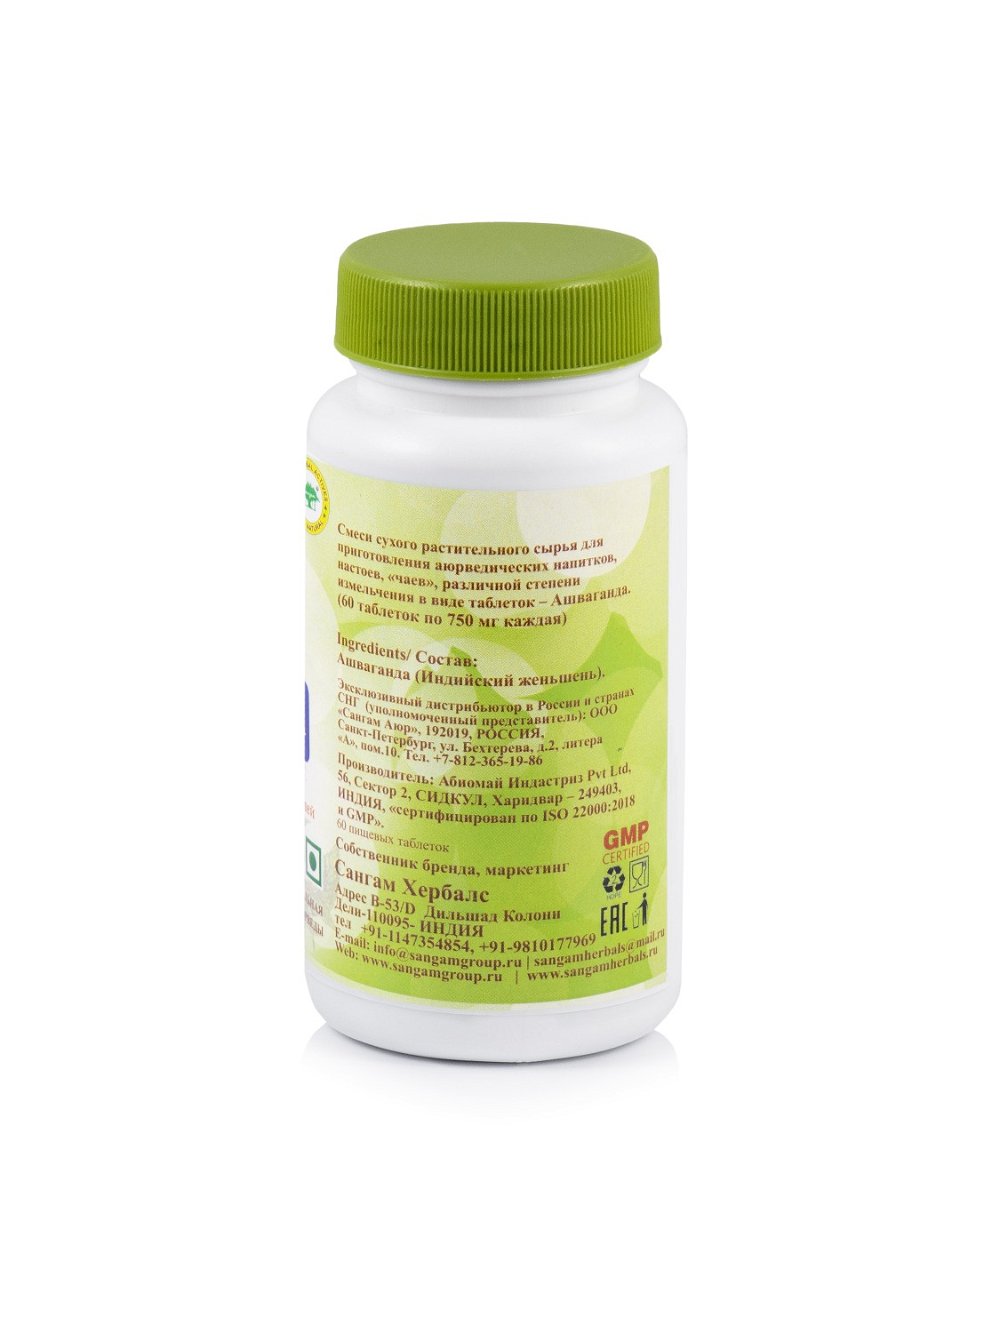 Ашваганда Sangam Herbals (60 таблеток), 